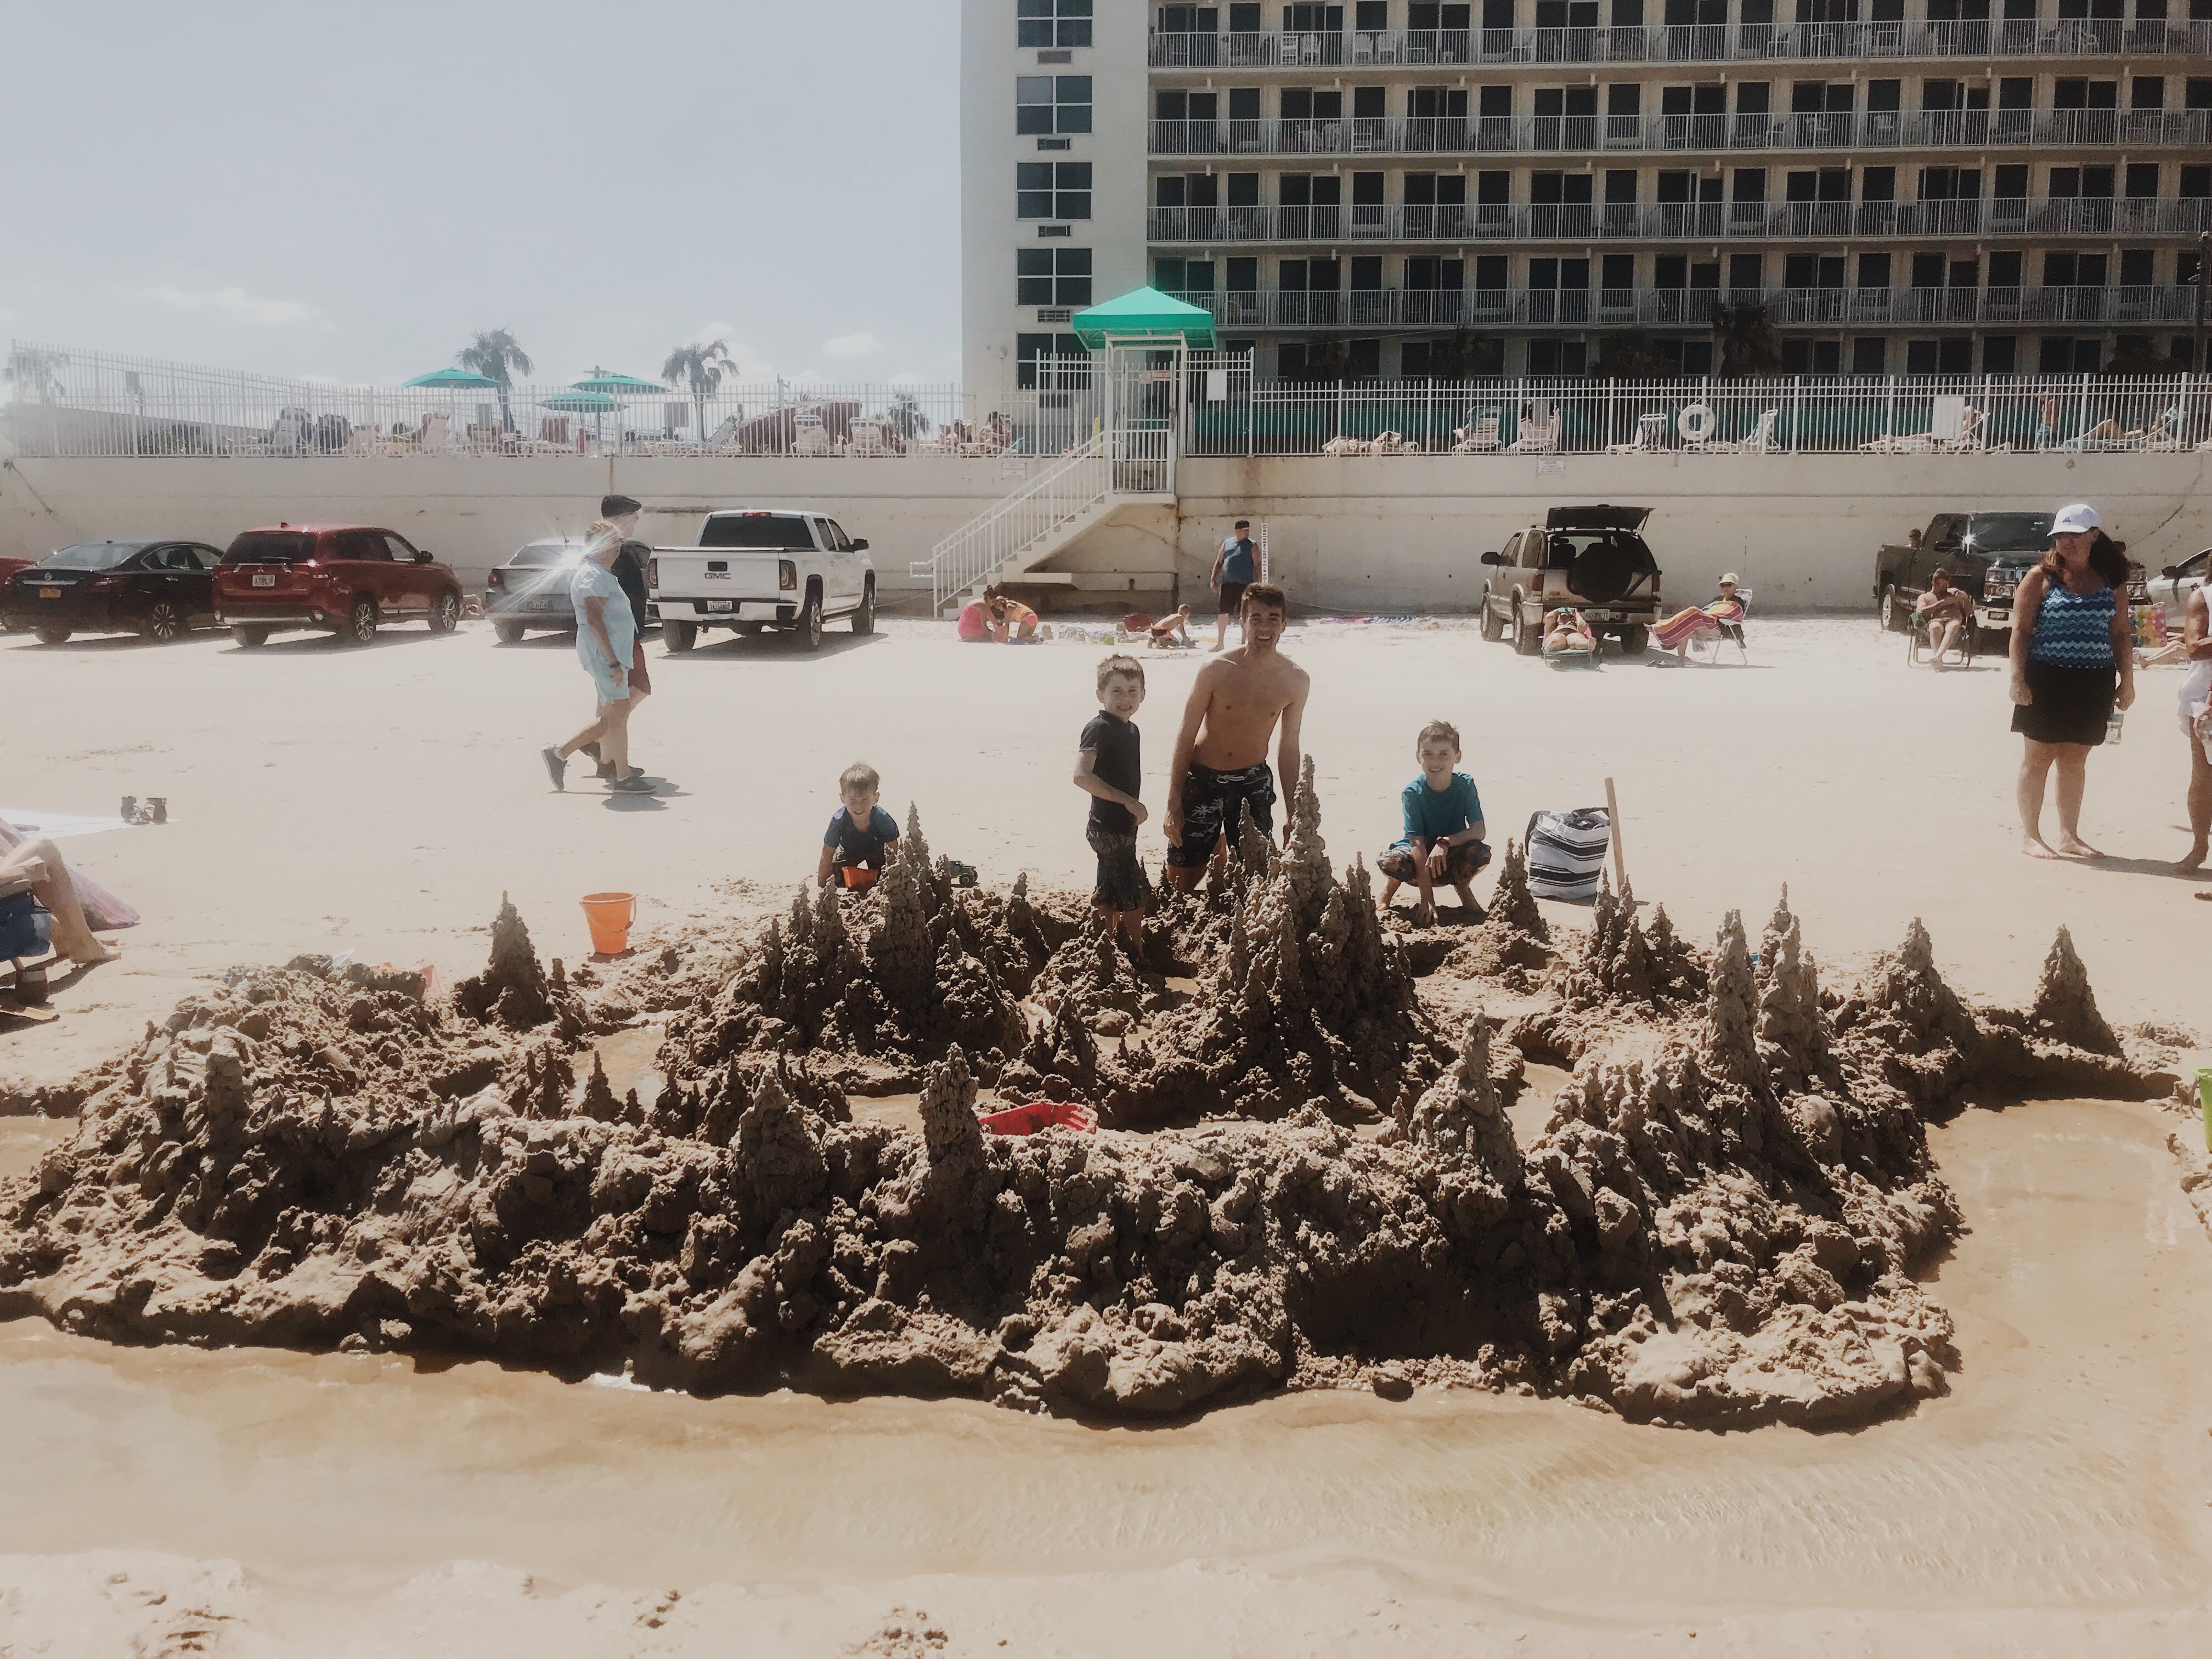 A group building an immense sand castle